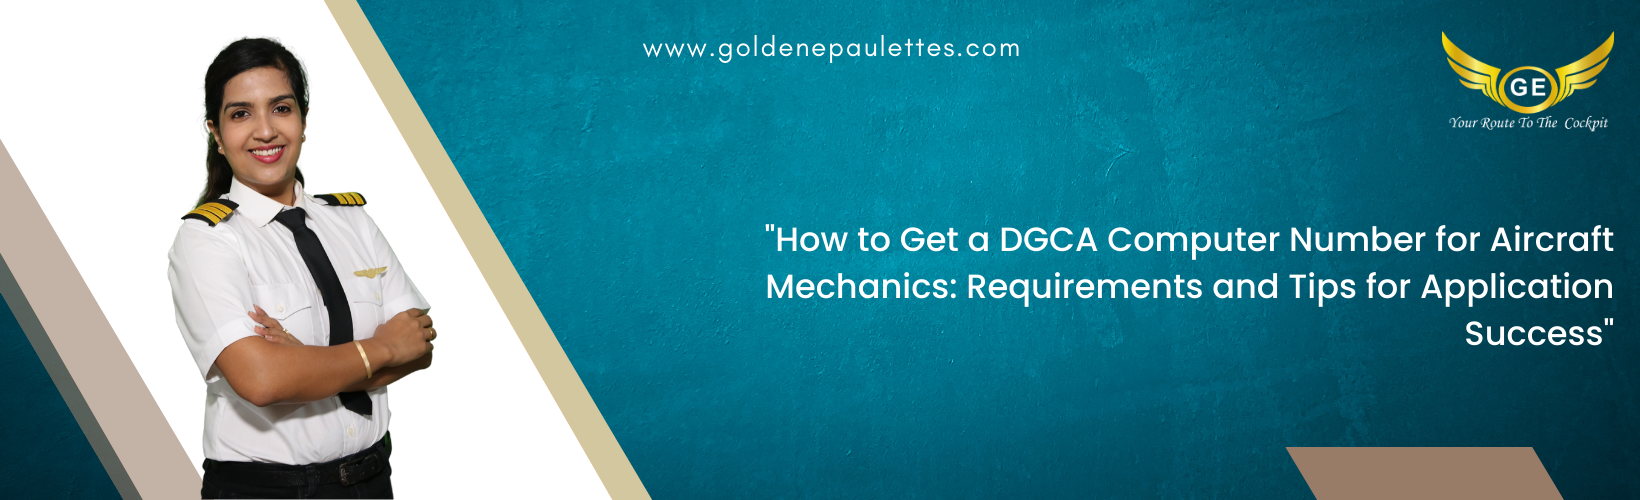 DGCA Computer Number Requirements for Aircraft Mechanics